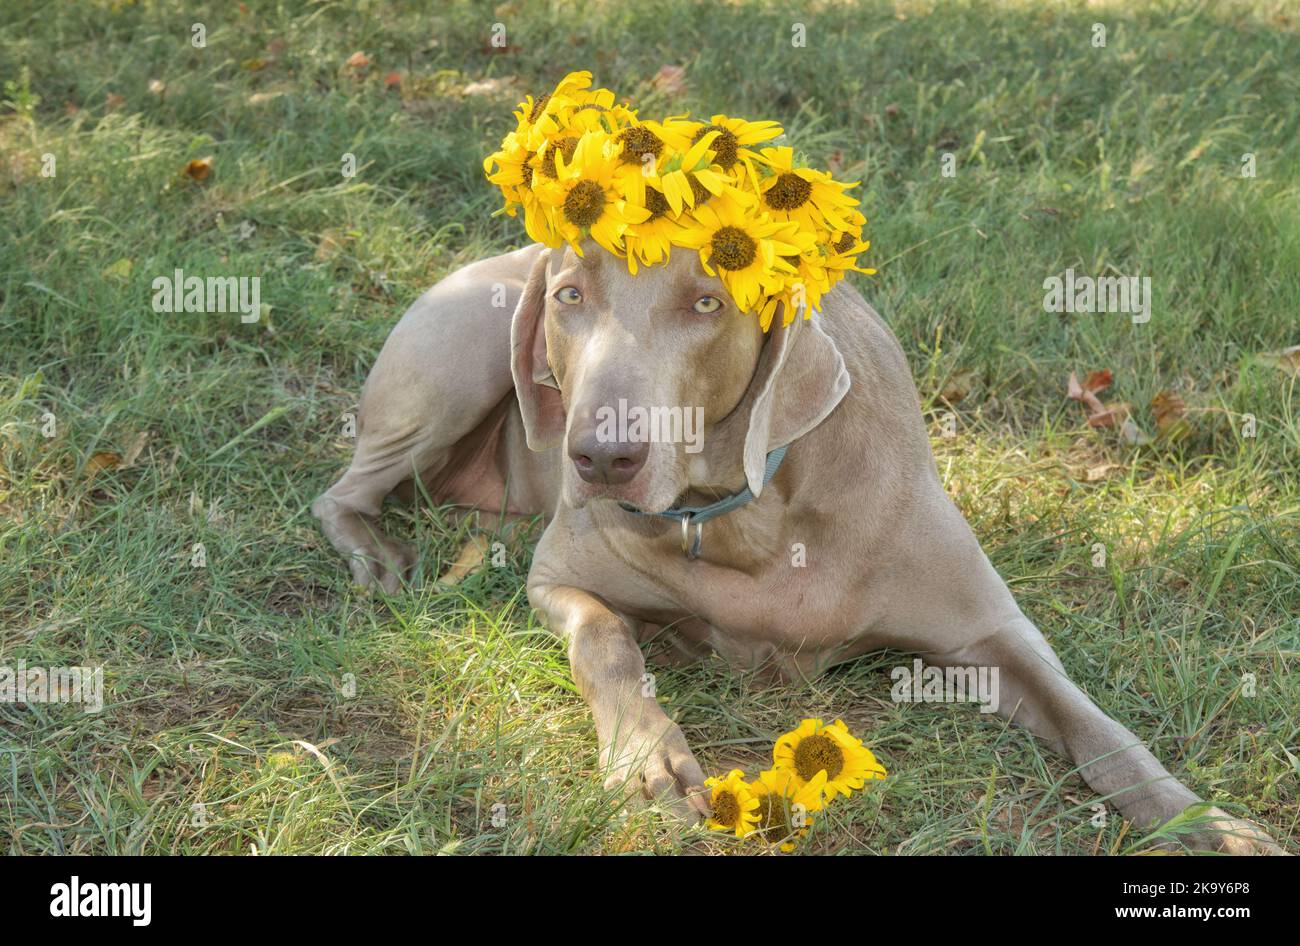 Bel cane Weimaraner sdraiato in erba, indossando una corona fatta di girasoli Foto Stock